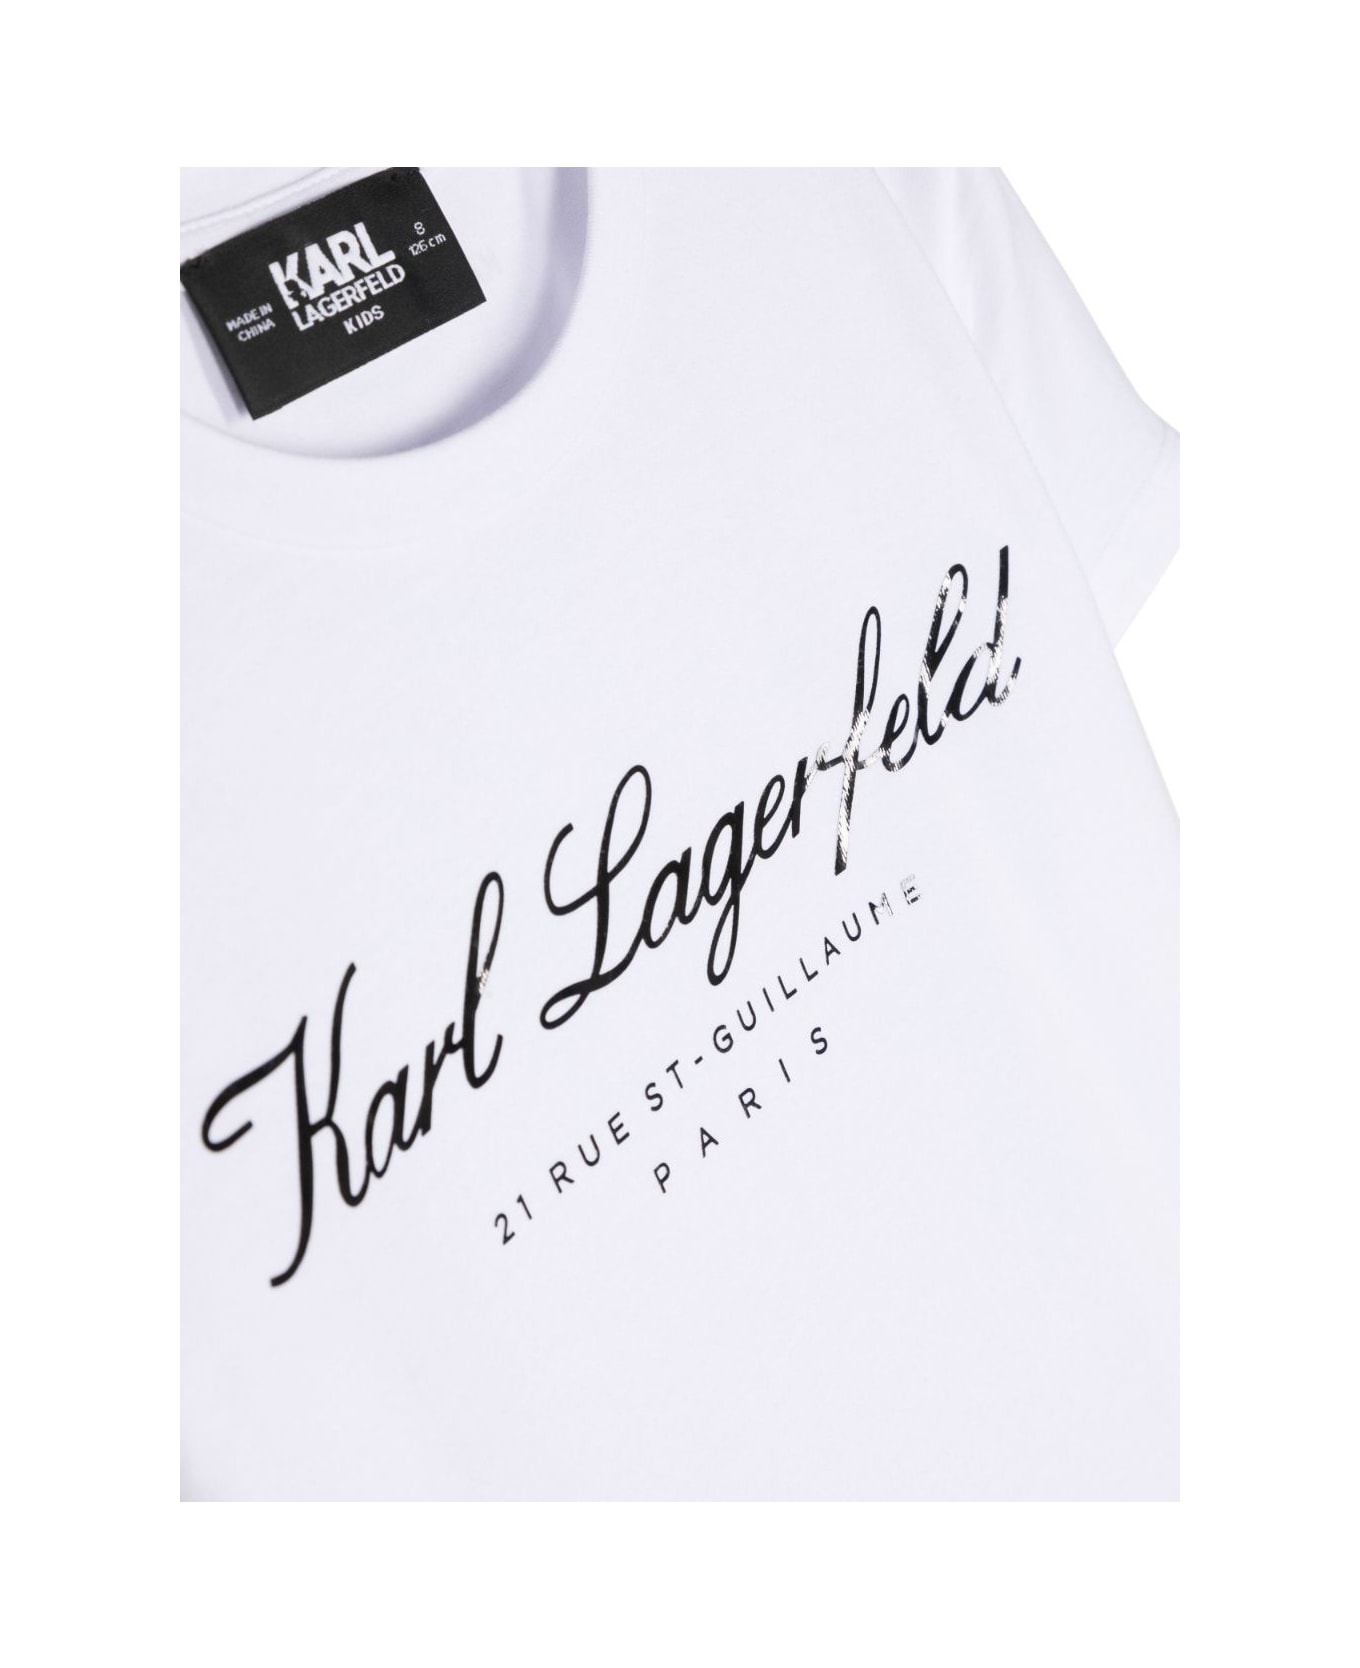 Karl Lagerfeld Kids Karl Lagerfeld T-shirt Bianca In Jersey Di Cotone Bambina - Bianco